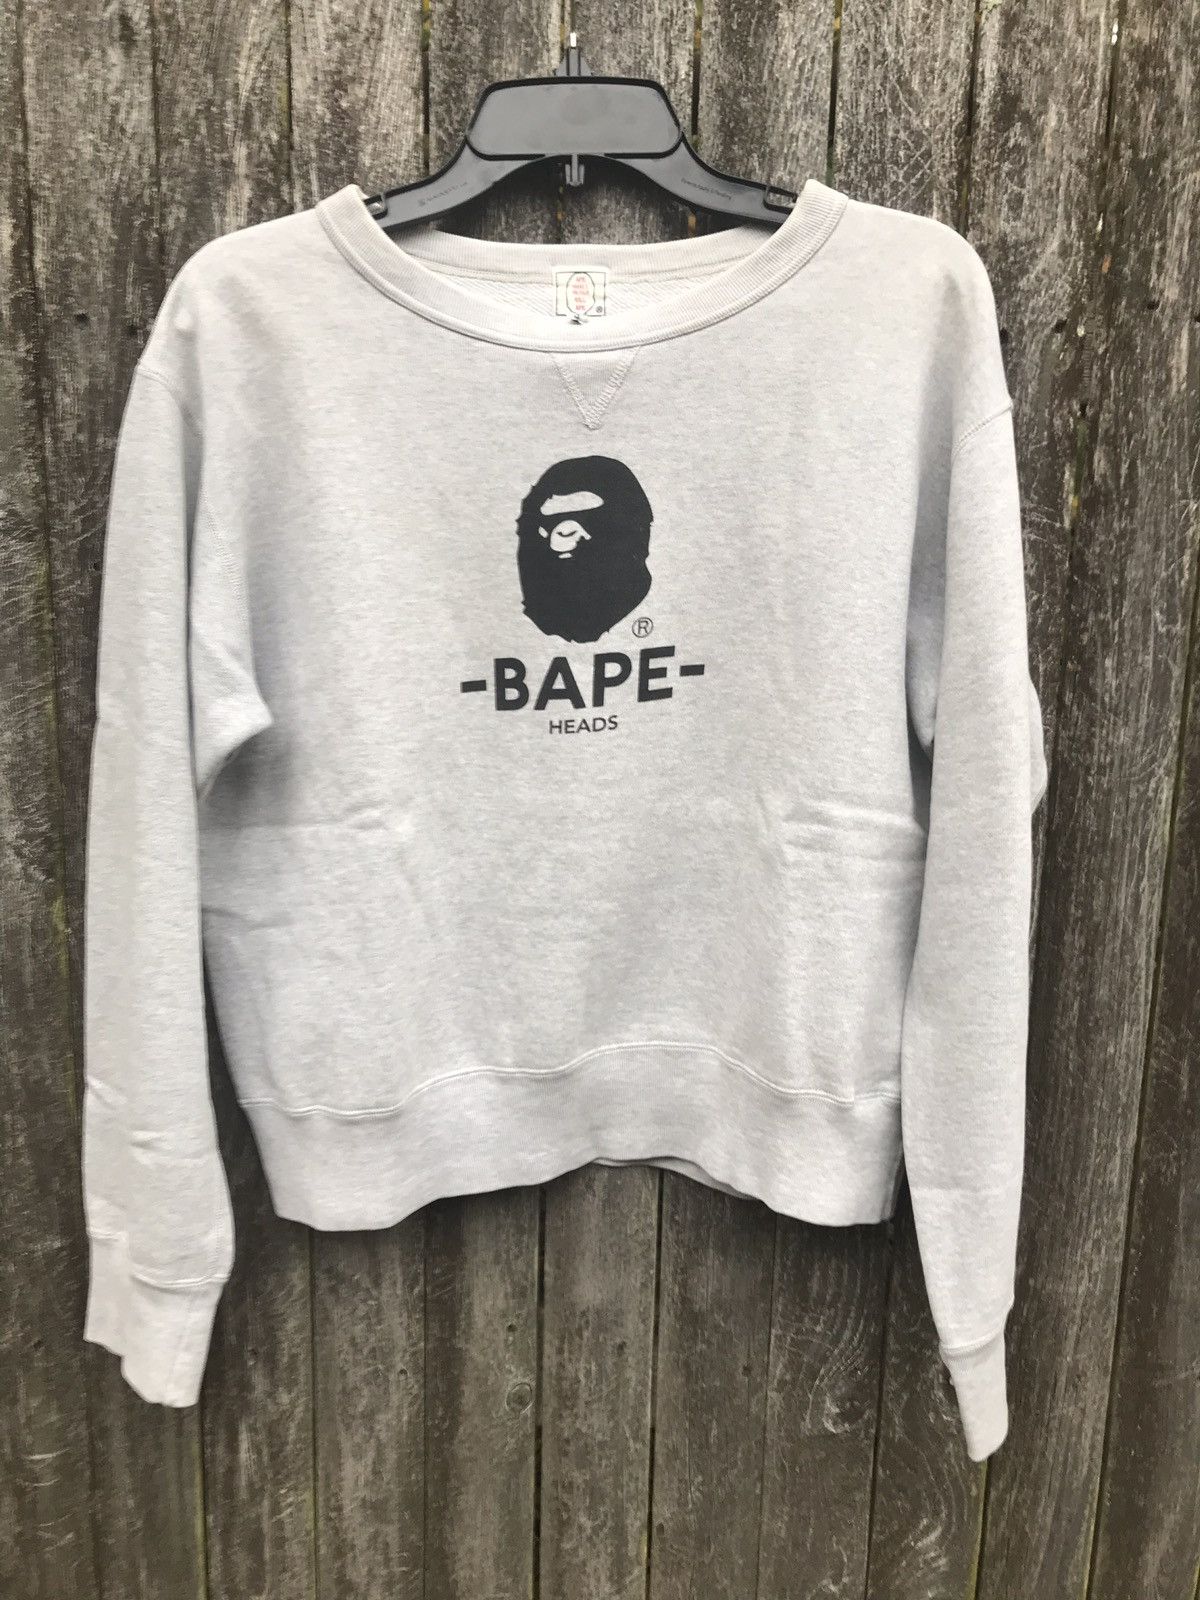 Bape Rare 2002 OG Bape Heads Crewneck Sweatshirt y2k vintage Size US S / EU 44-46 / 1 - 2 Preview